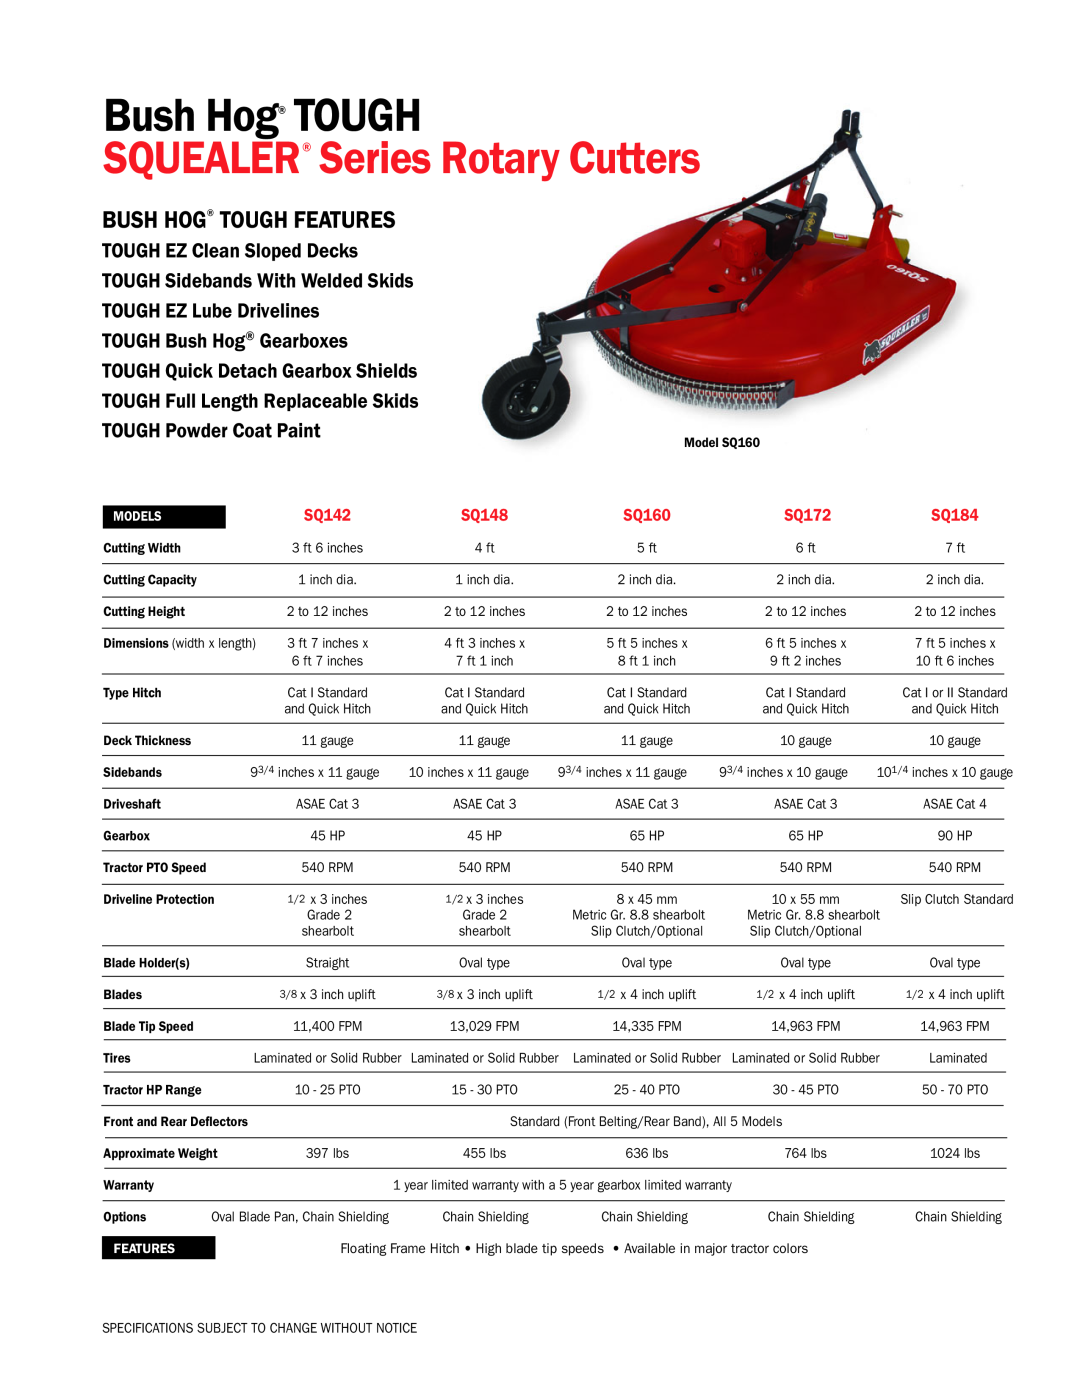 Bush Hog Sq160 specifications Squealer Series Rotary Cutters, Bush Hog TOUGH Features, TOUGH EZ Clean Sloped Decks 